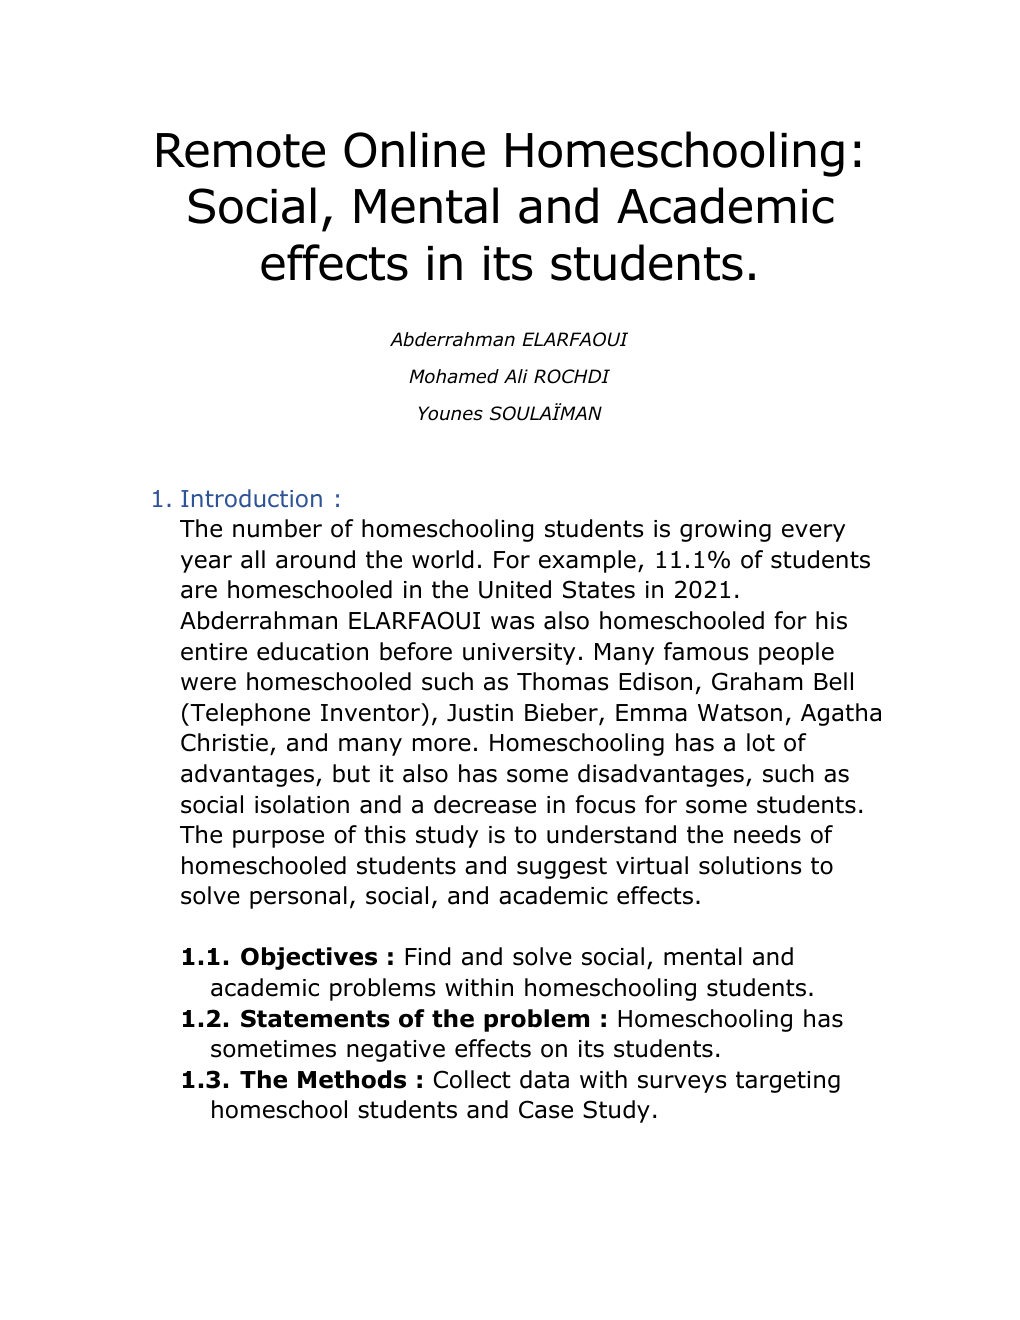 Prévisualisation du document Remote Online Homeschooling : Social effects on the students